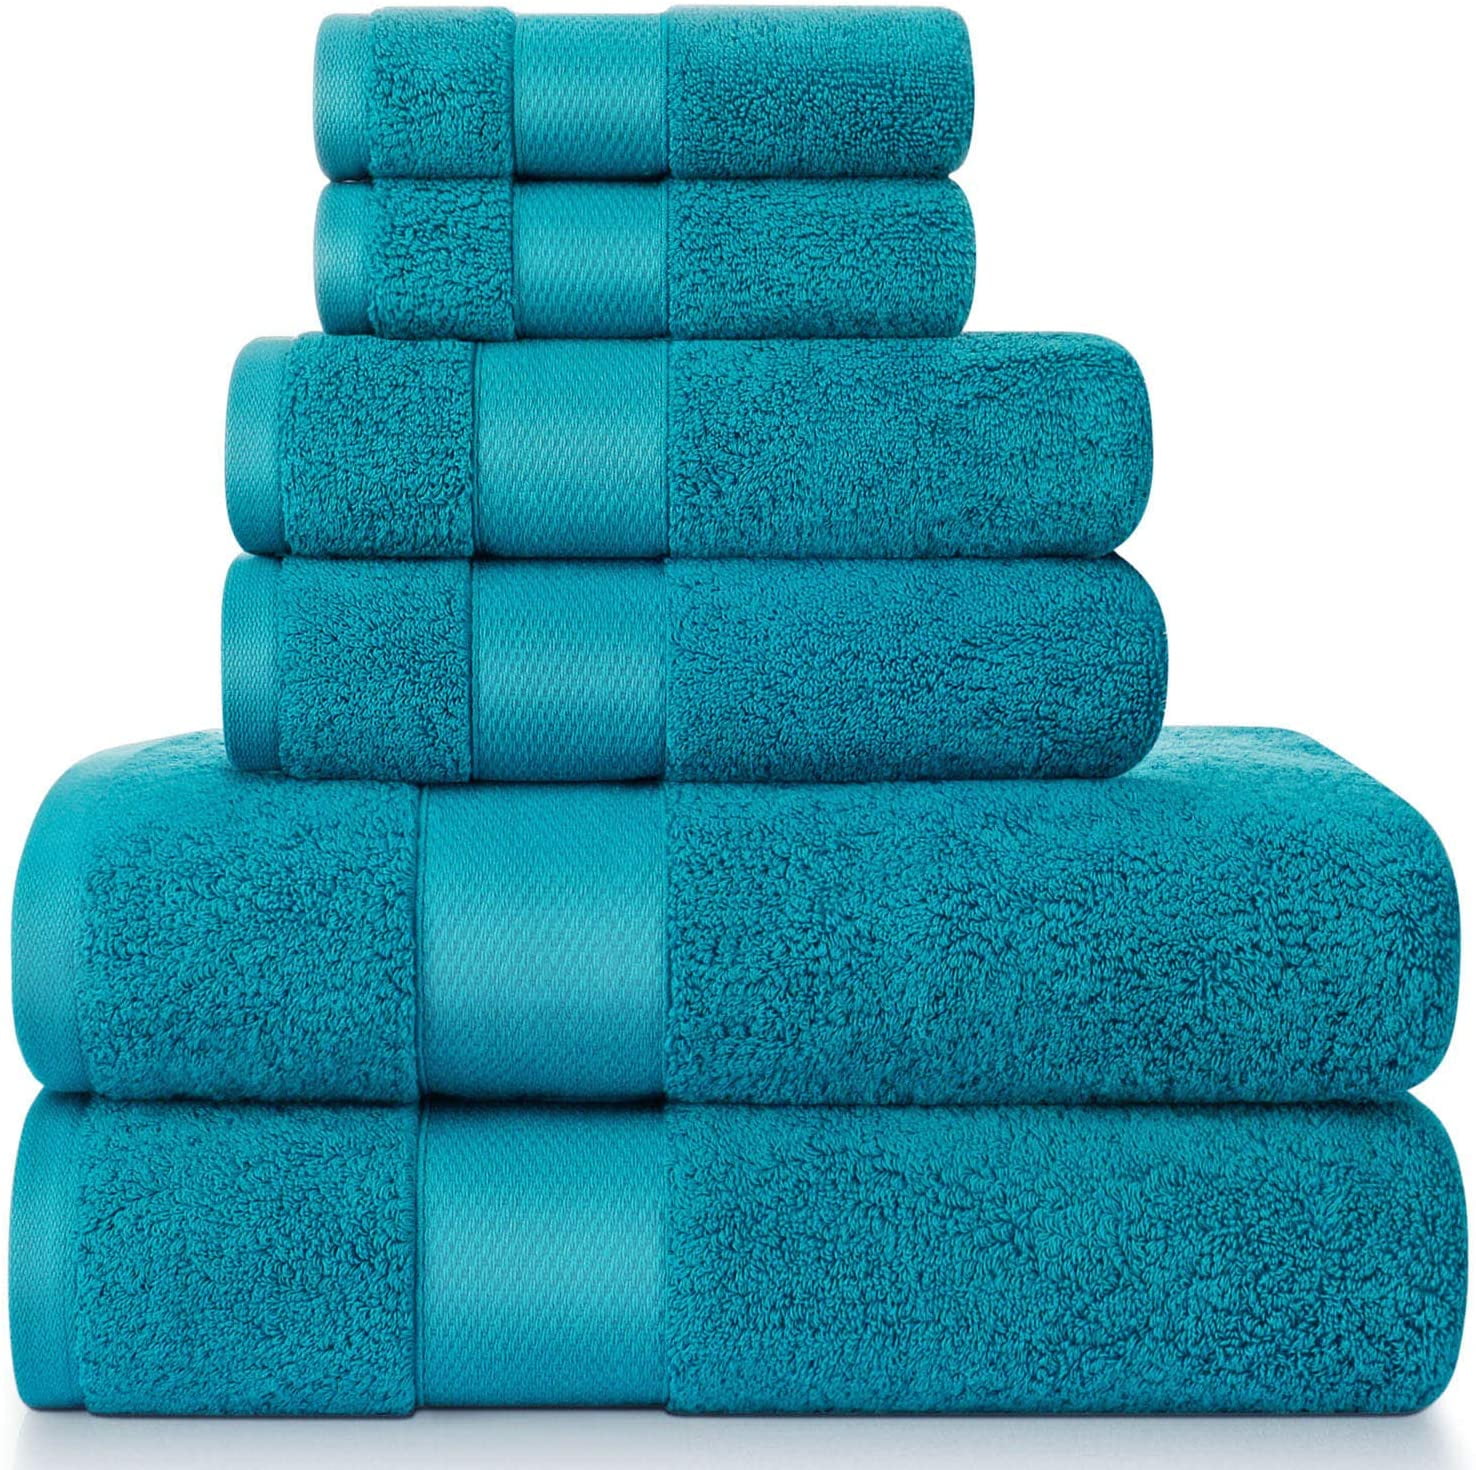 2 Pieces HandTowels Set 600 GSM Egyptian Cotton Waffle Luxury Bath Sheet Towels 